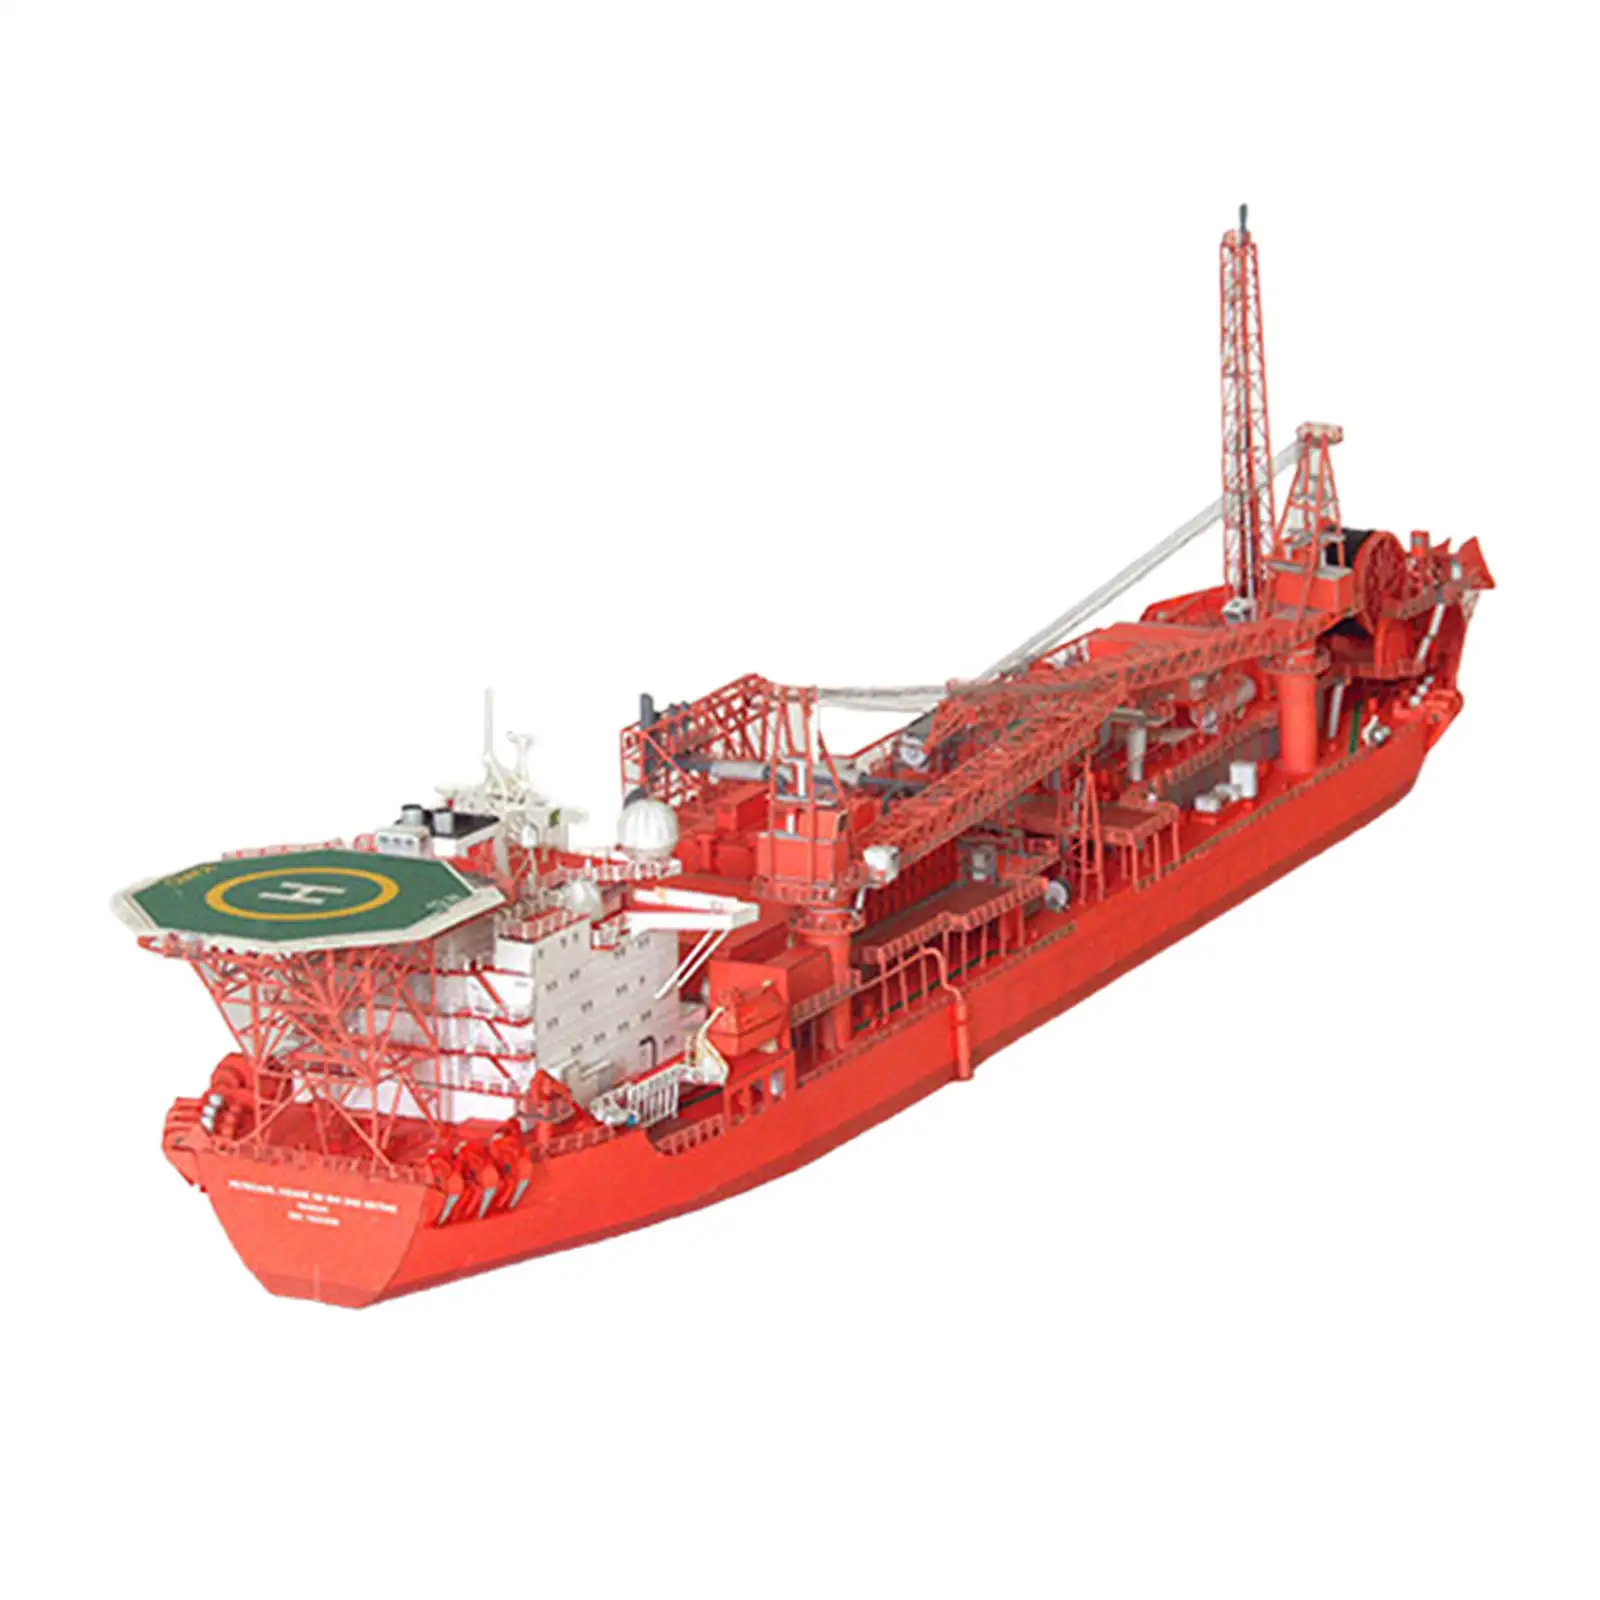 Offshore Floating Production Tanker 3D Paper Model Ship Education Papercraft